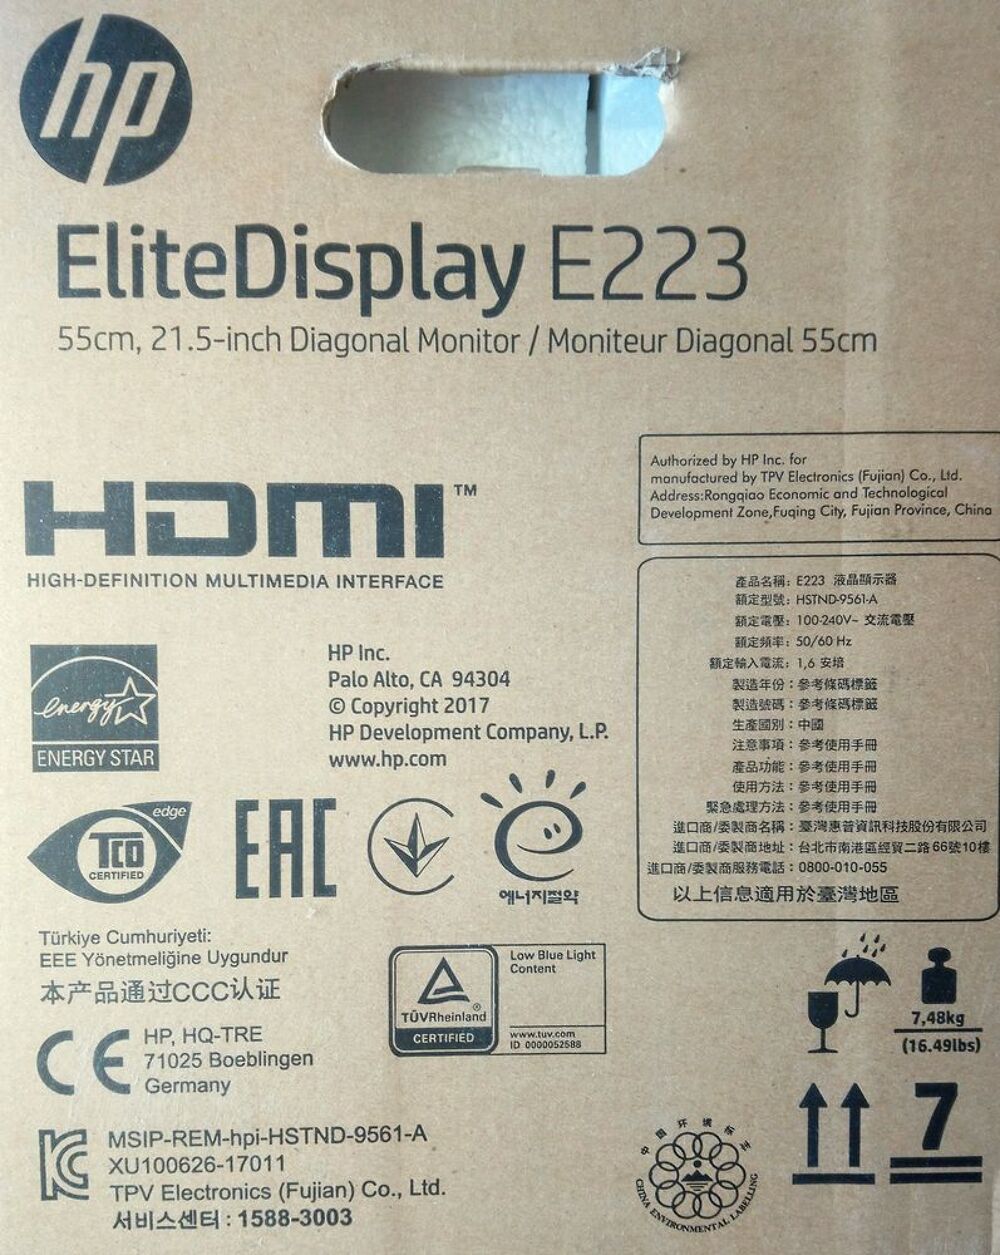 &Eacute;cran HP Elite Display E223 Matriel informatique